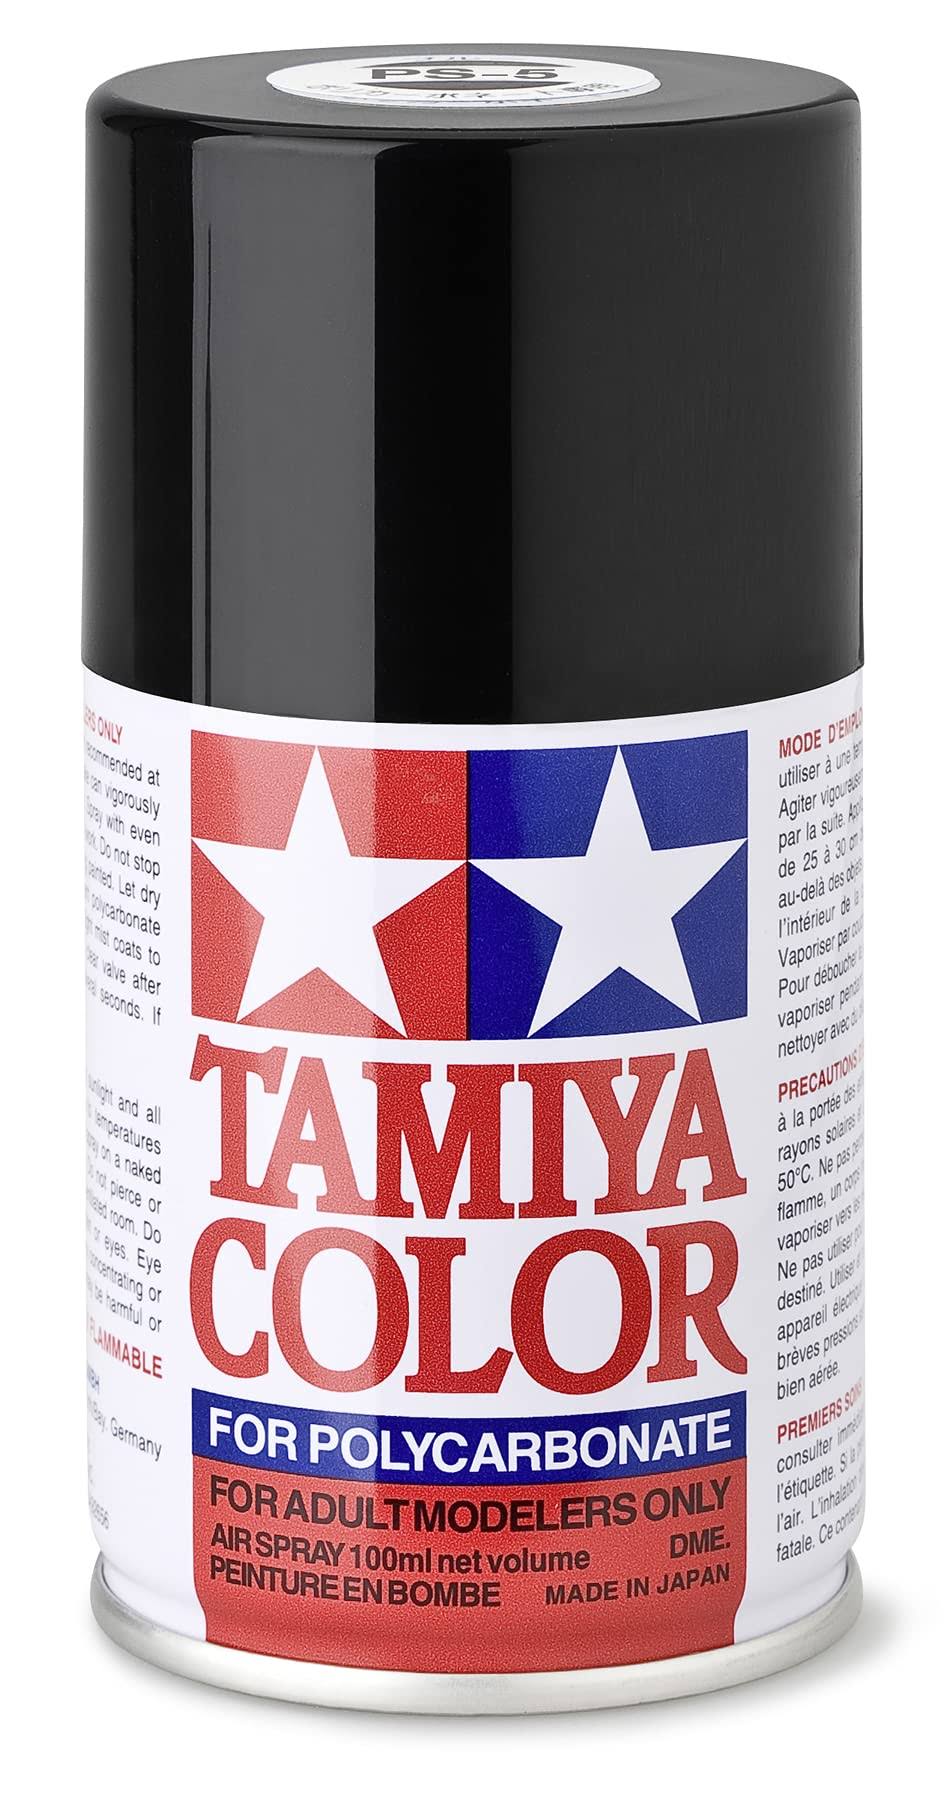 Tamiya Polycarbonate Spray - Black, 100ml